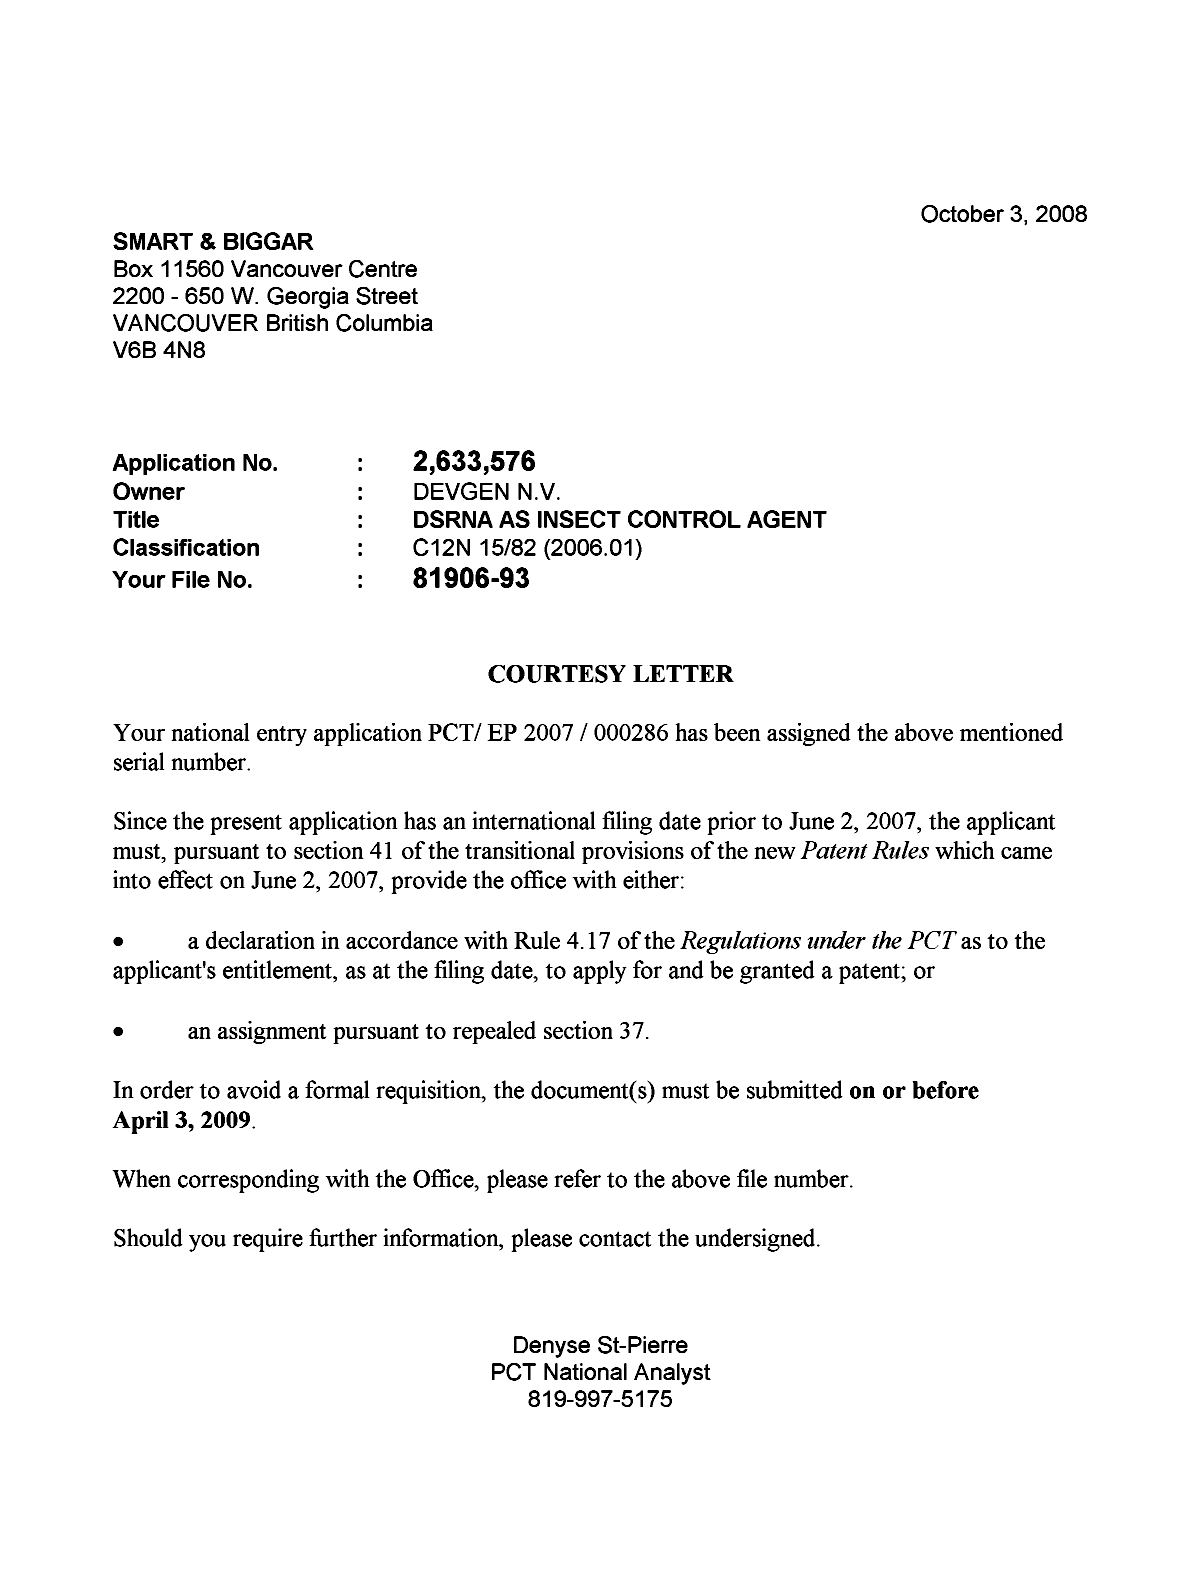 Canadian Patent Document 2633576. Correspondence 20081003. Image 1 of 1